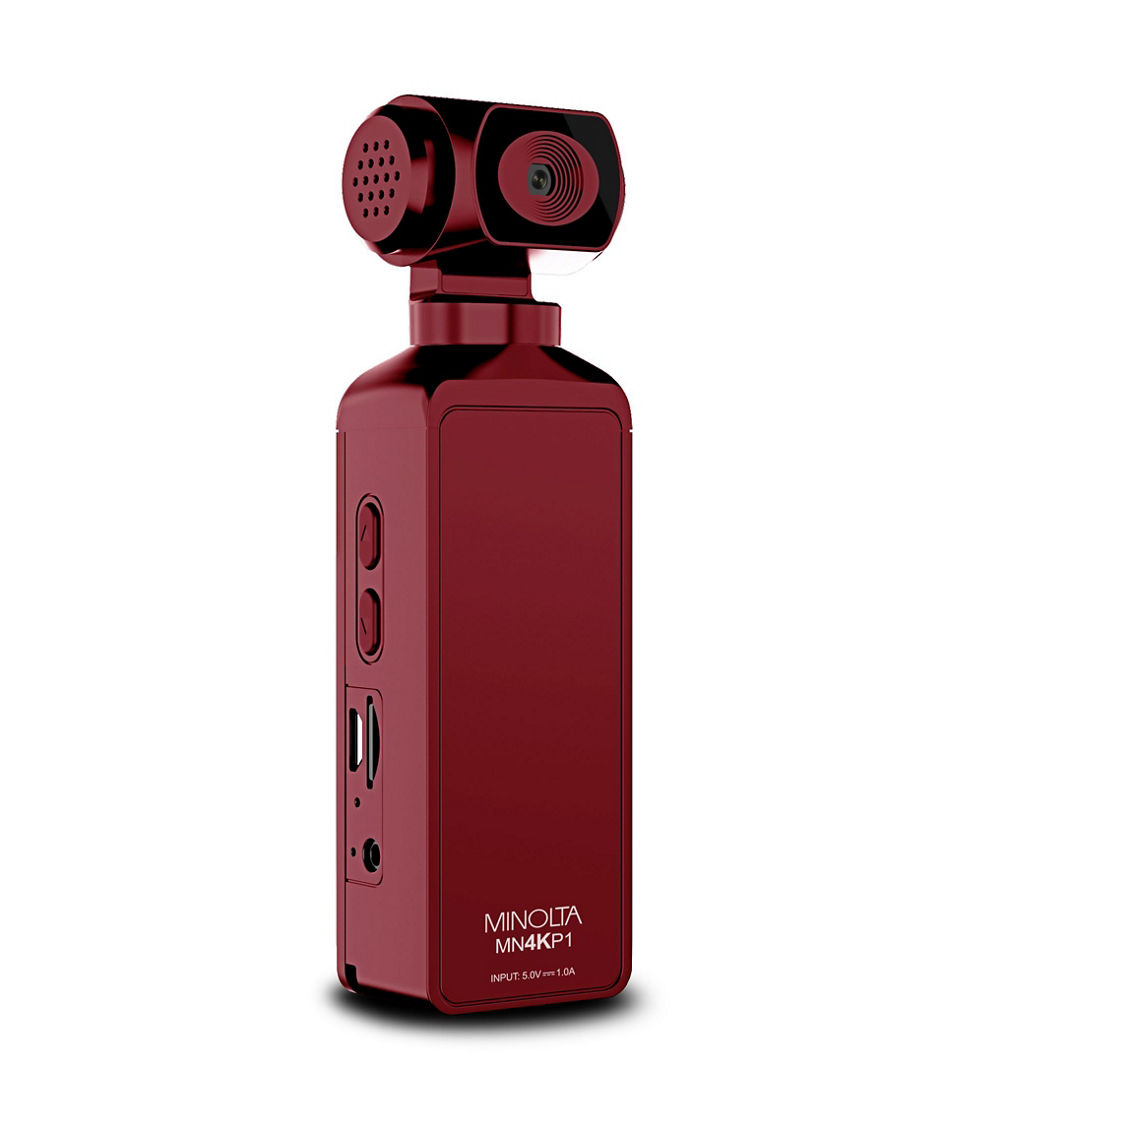 Minolta MN4KP1 4K Ultra HD Pocket Camcorder with WiFi & Waterproof Case - Image 3 of 4